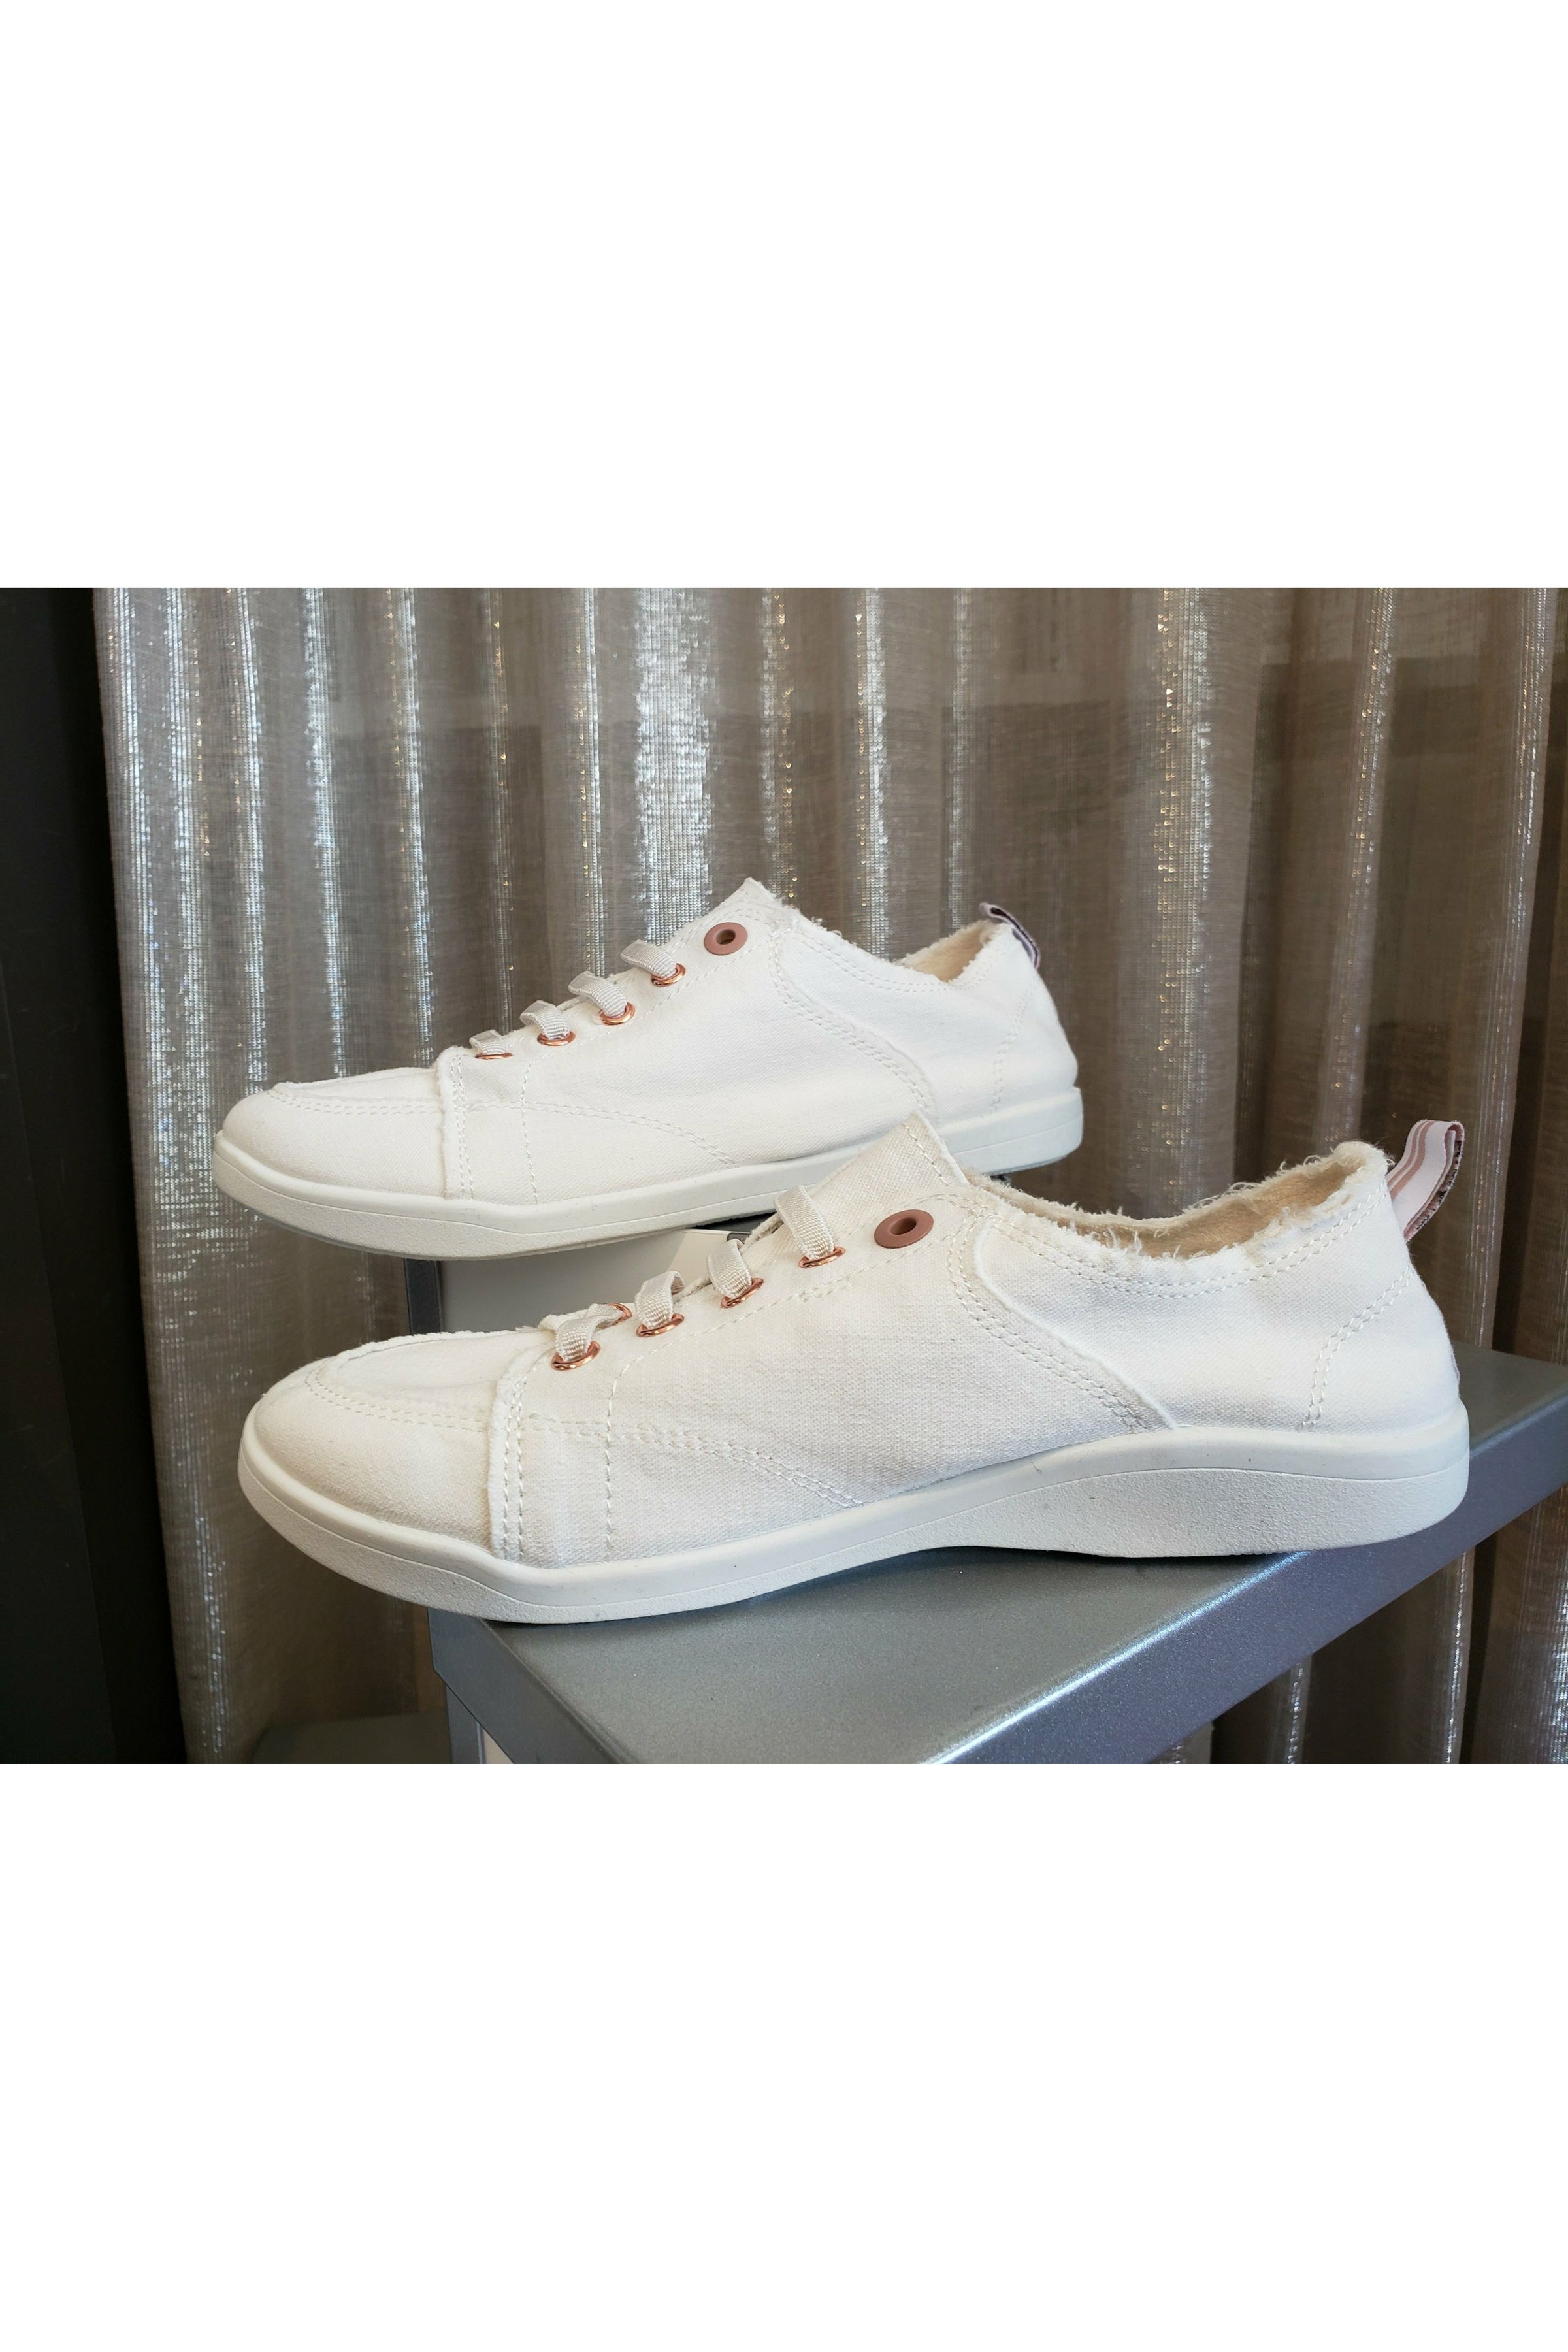 Vionic Venice Canvas Sneakers - Style Pismo CNVS, cream, pair